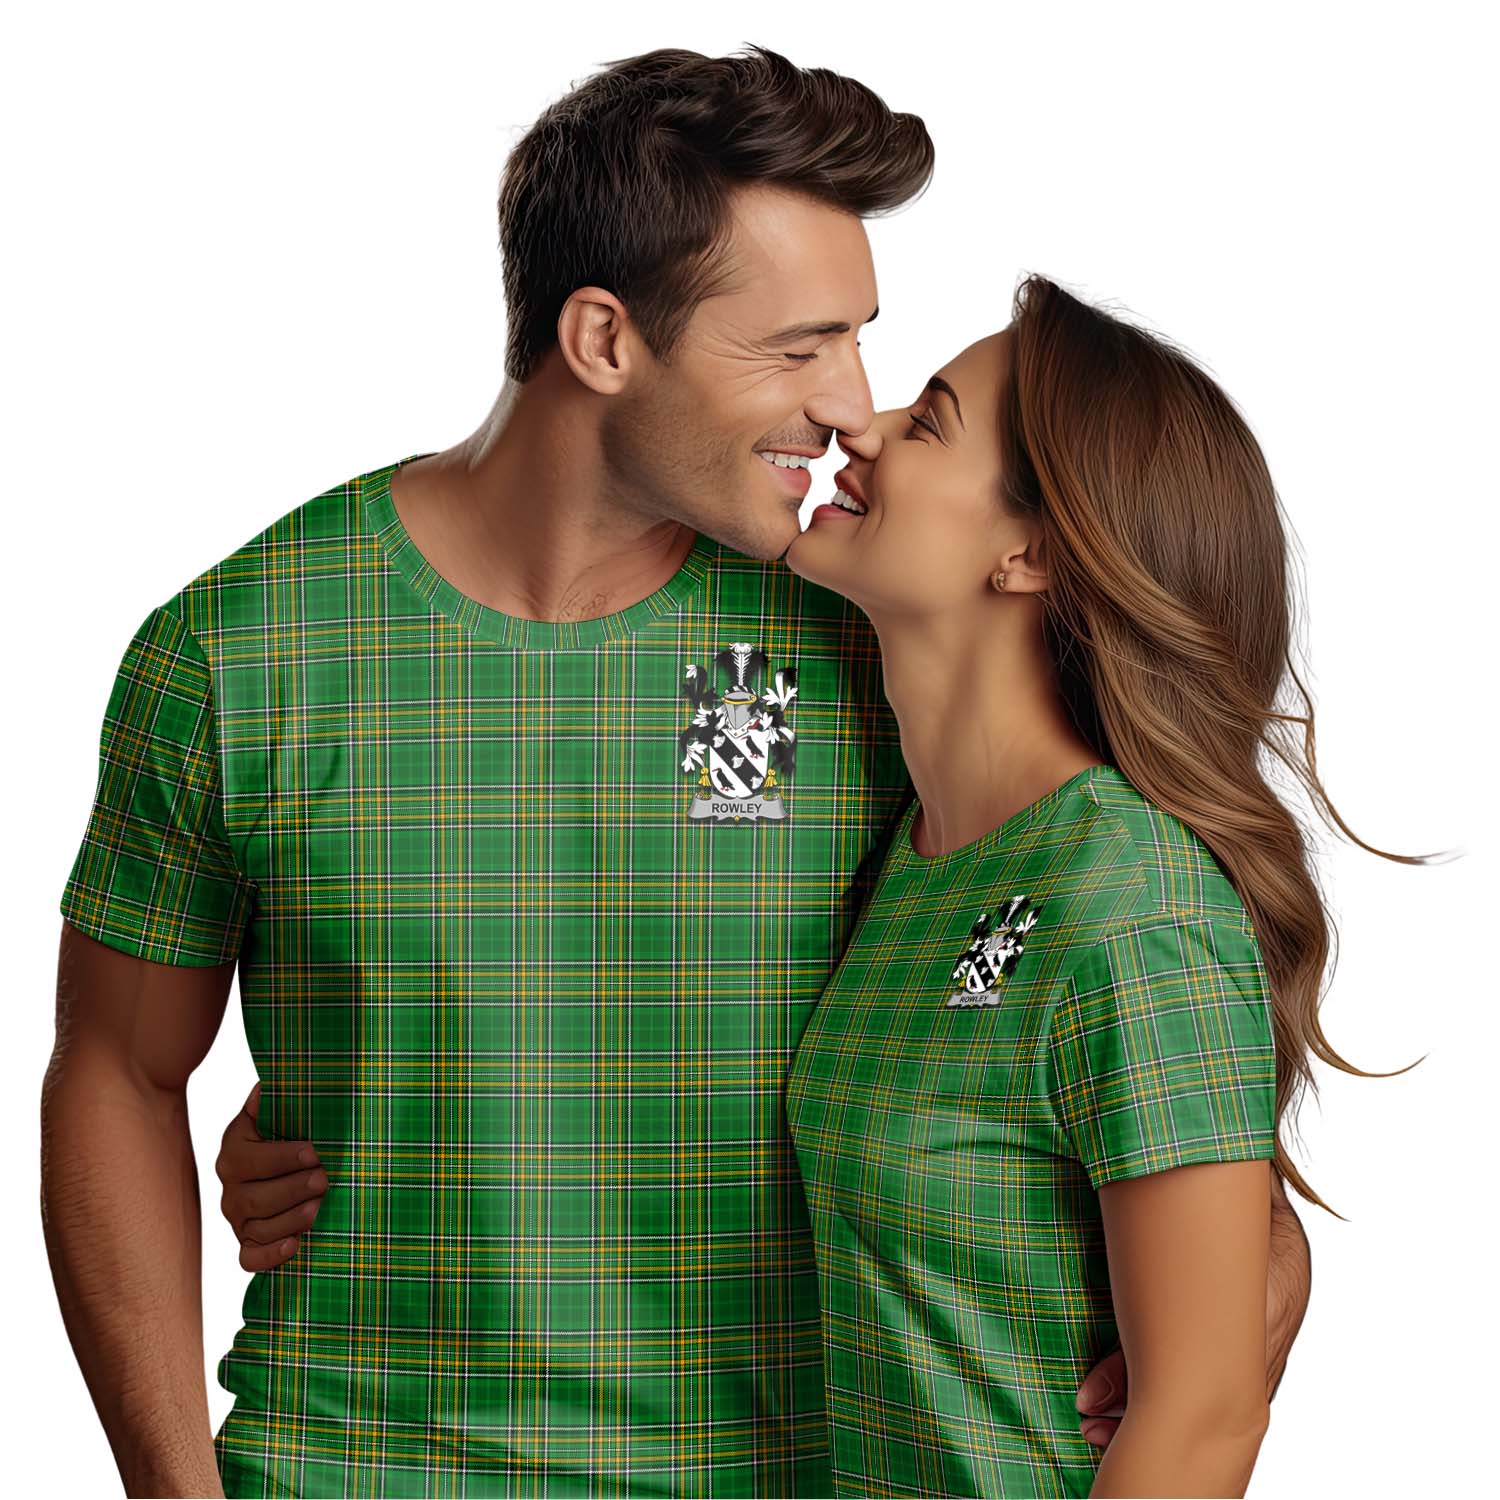 Tartan Vibes Clothing Rowley Ireland Clan Tartan T-Shirt with Family Seal